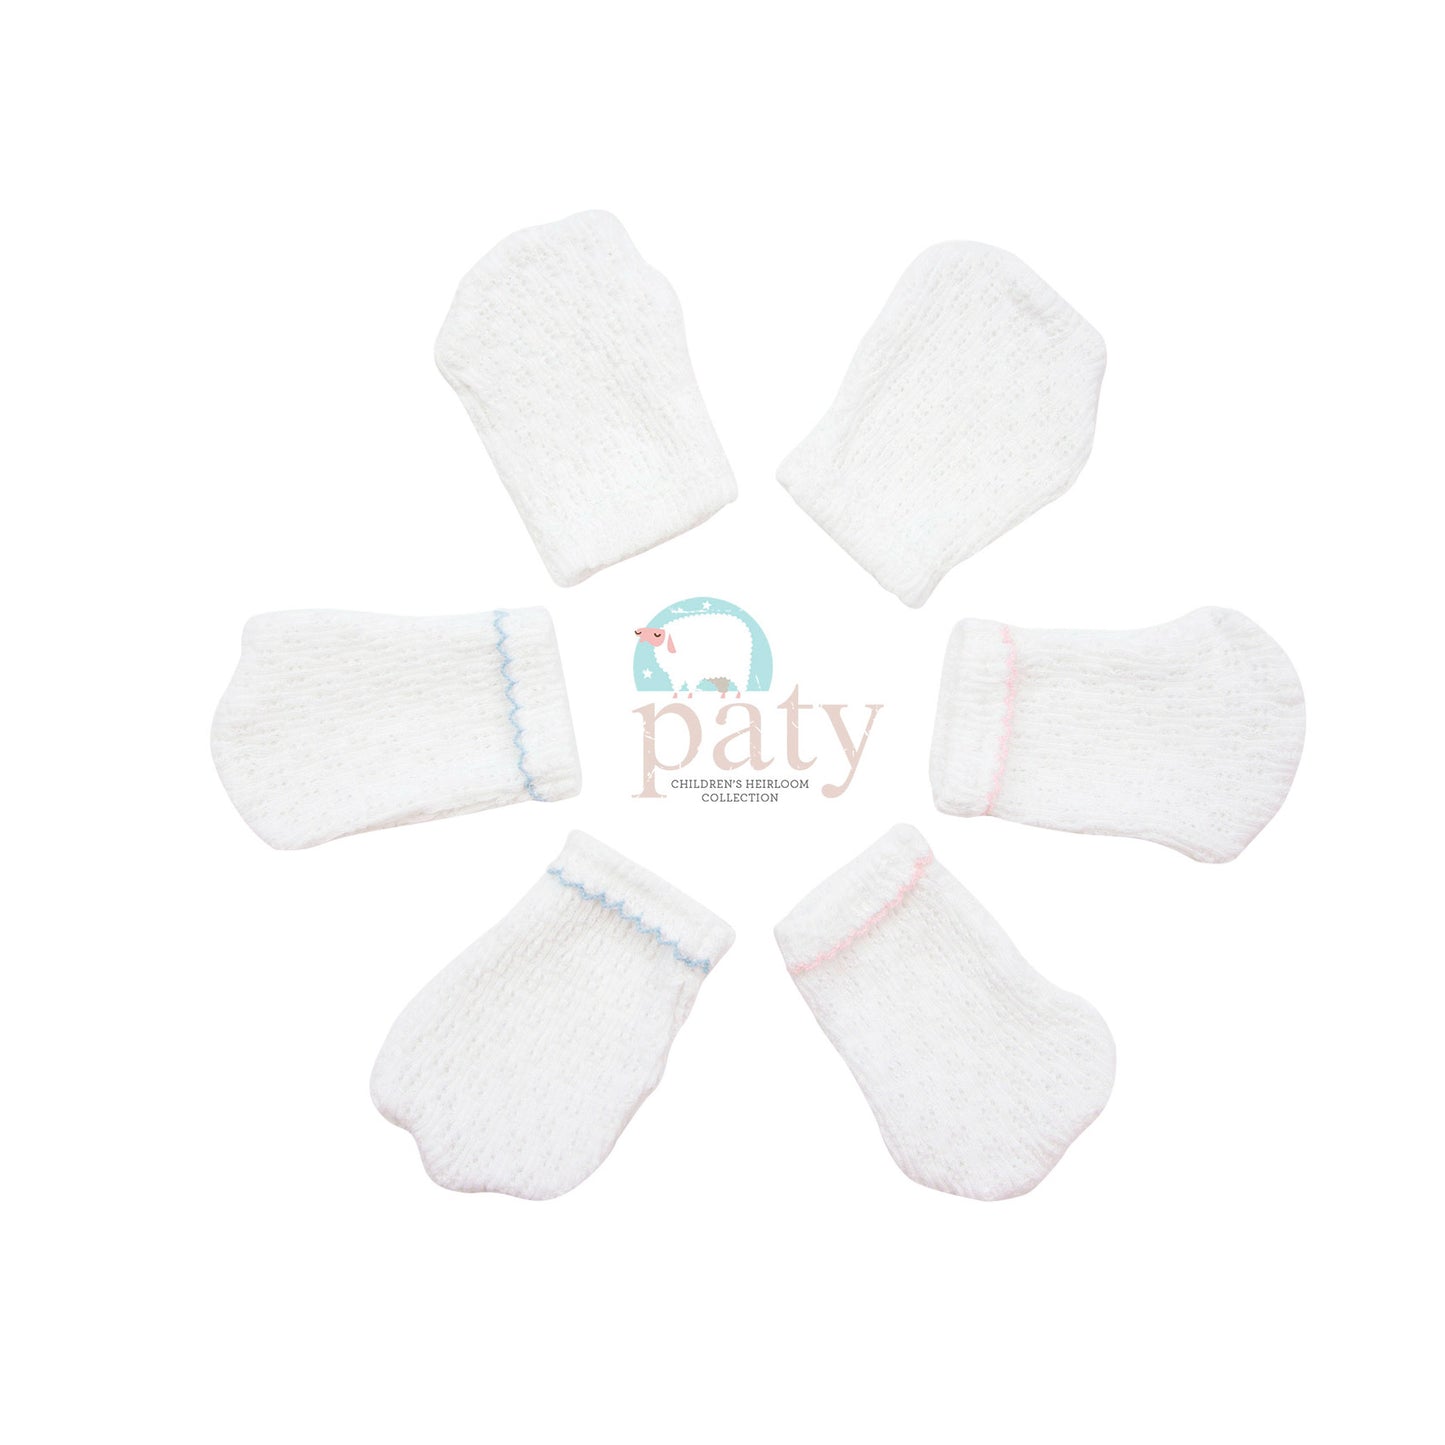 White Paty Knit Mittens